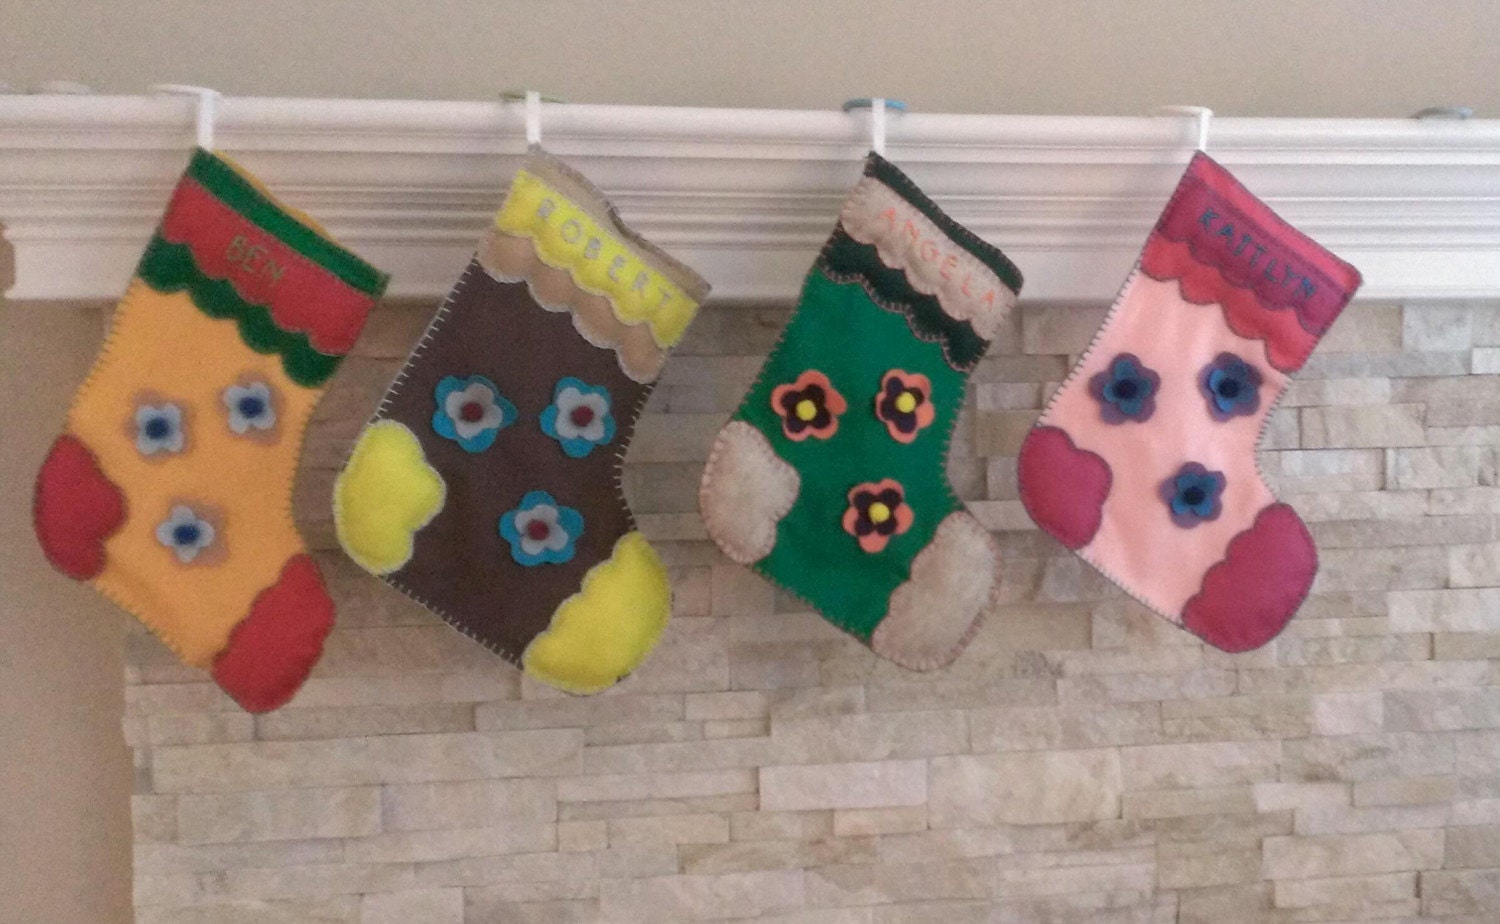 Christmas stockings - set of four - felt stockings Christmas decorations - personalized stocking